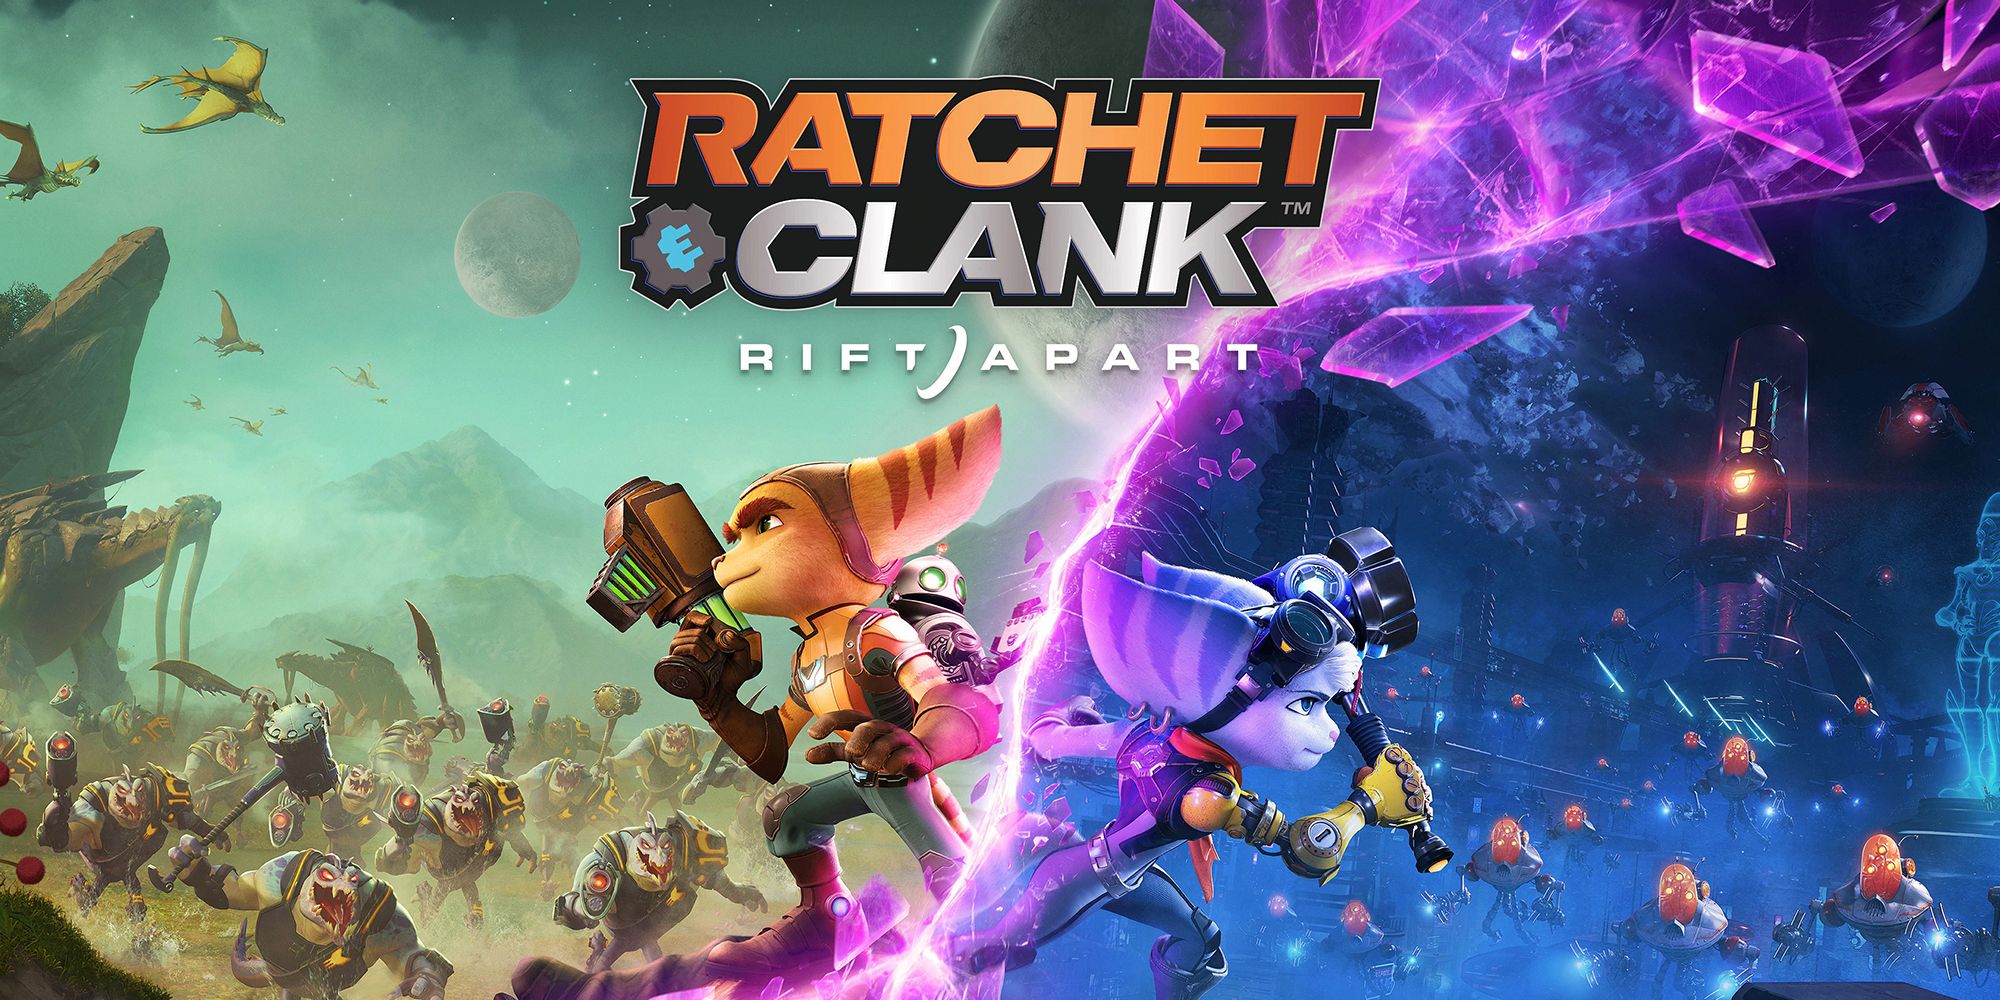 Ratchet & Clank: Revisión de Rift Apart |